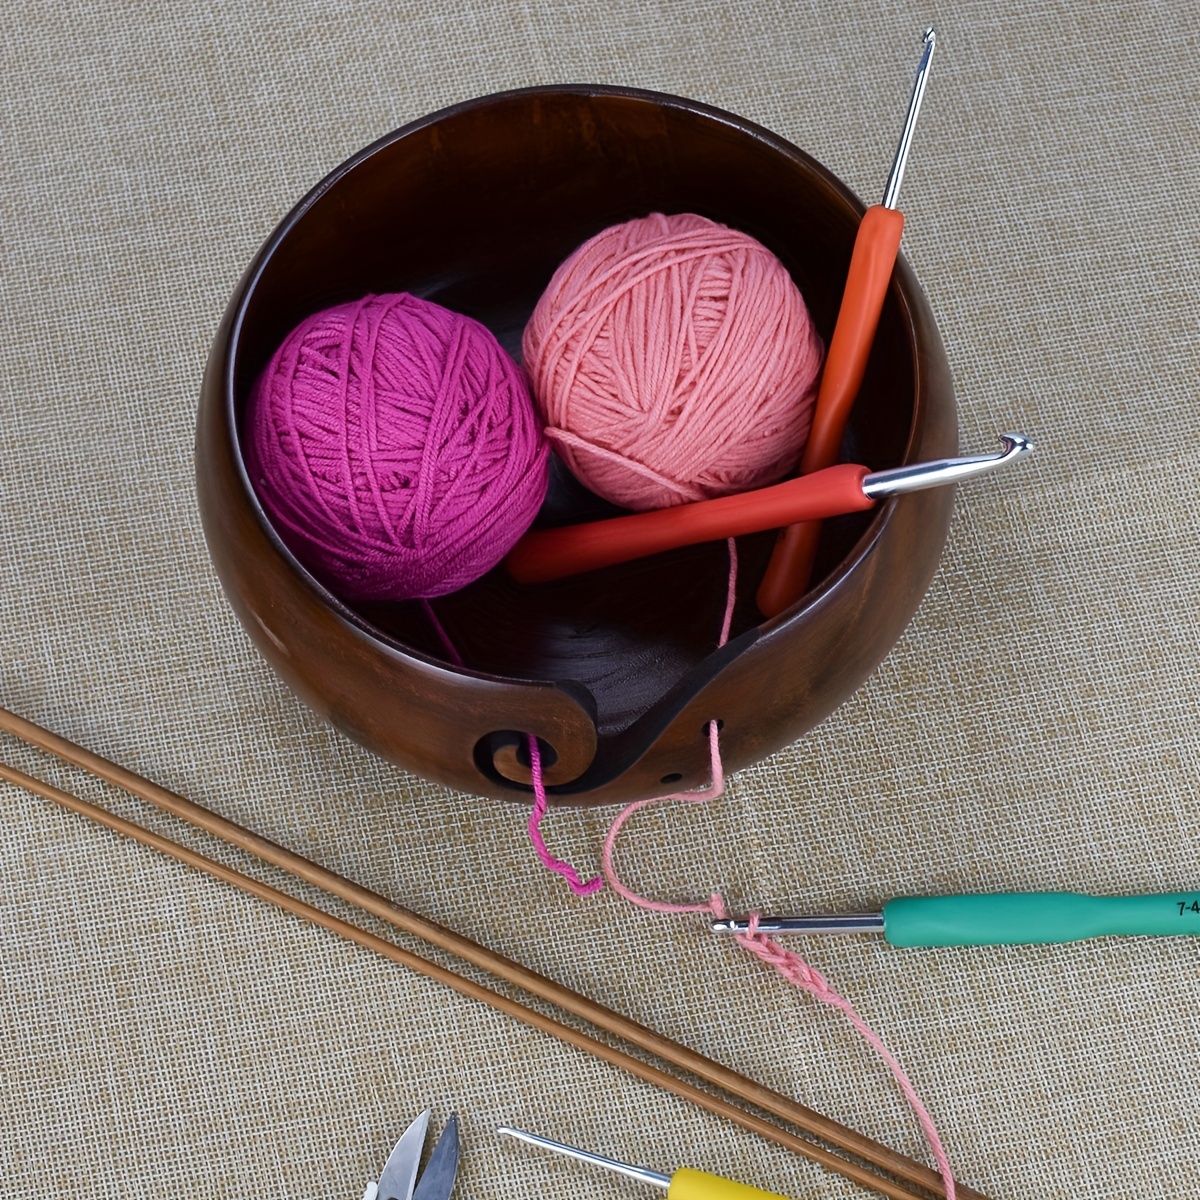 Handicrafts wooden yarn bowl | wooden yarn bowls for crocheting-yarn bowl  large